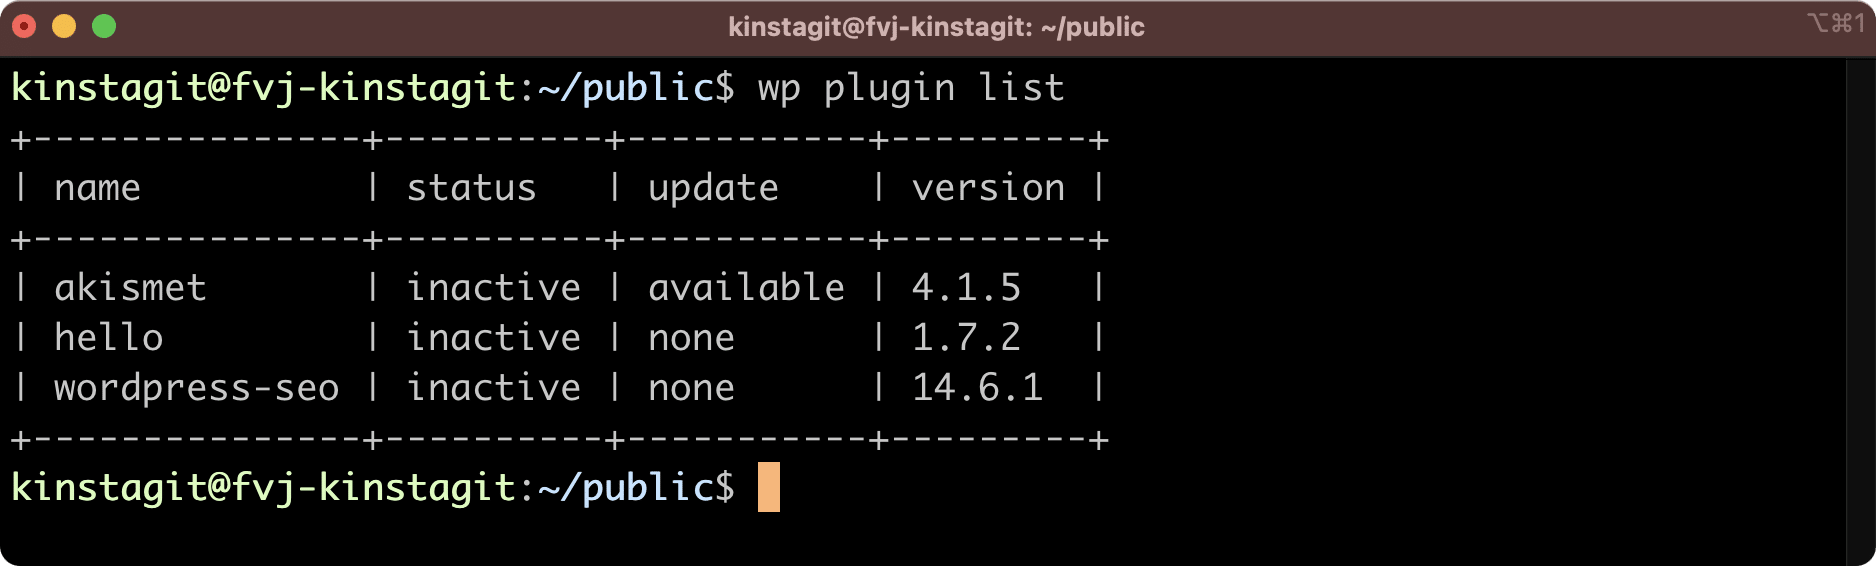 The Yoast SEO plugin was deployed via GitLab.